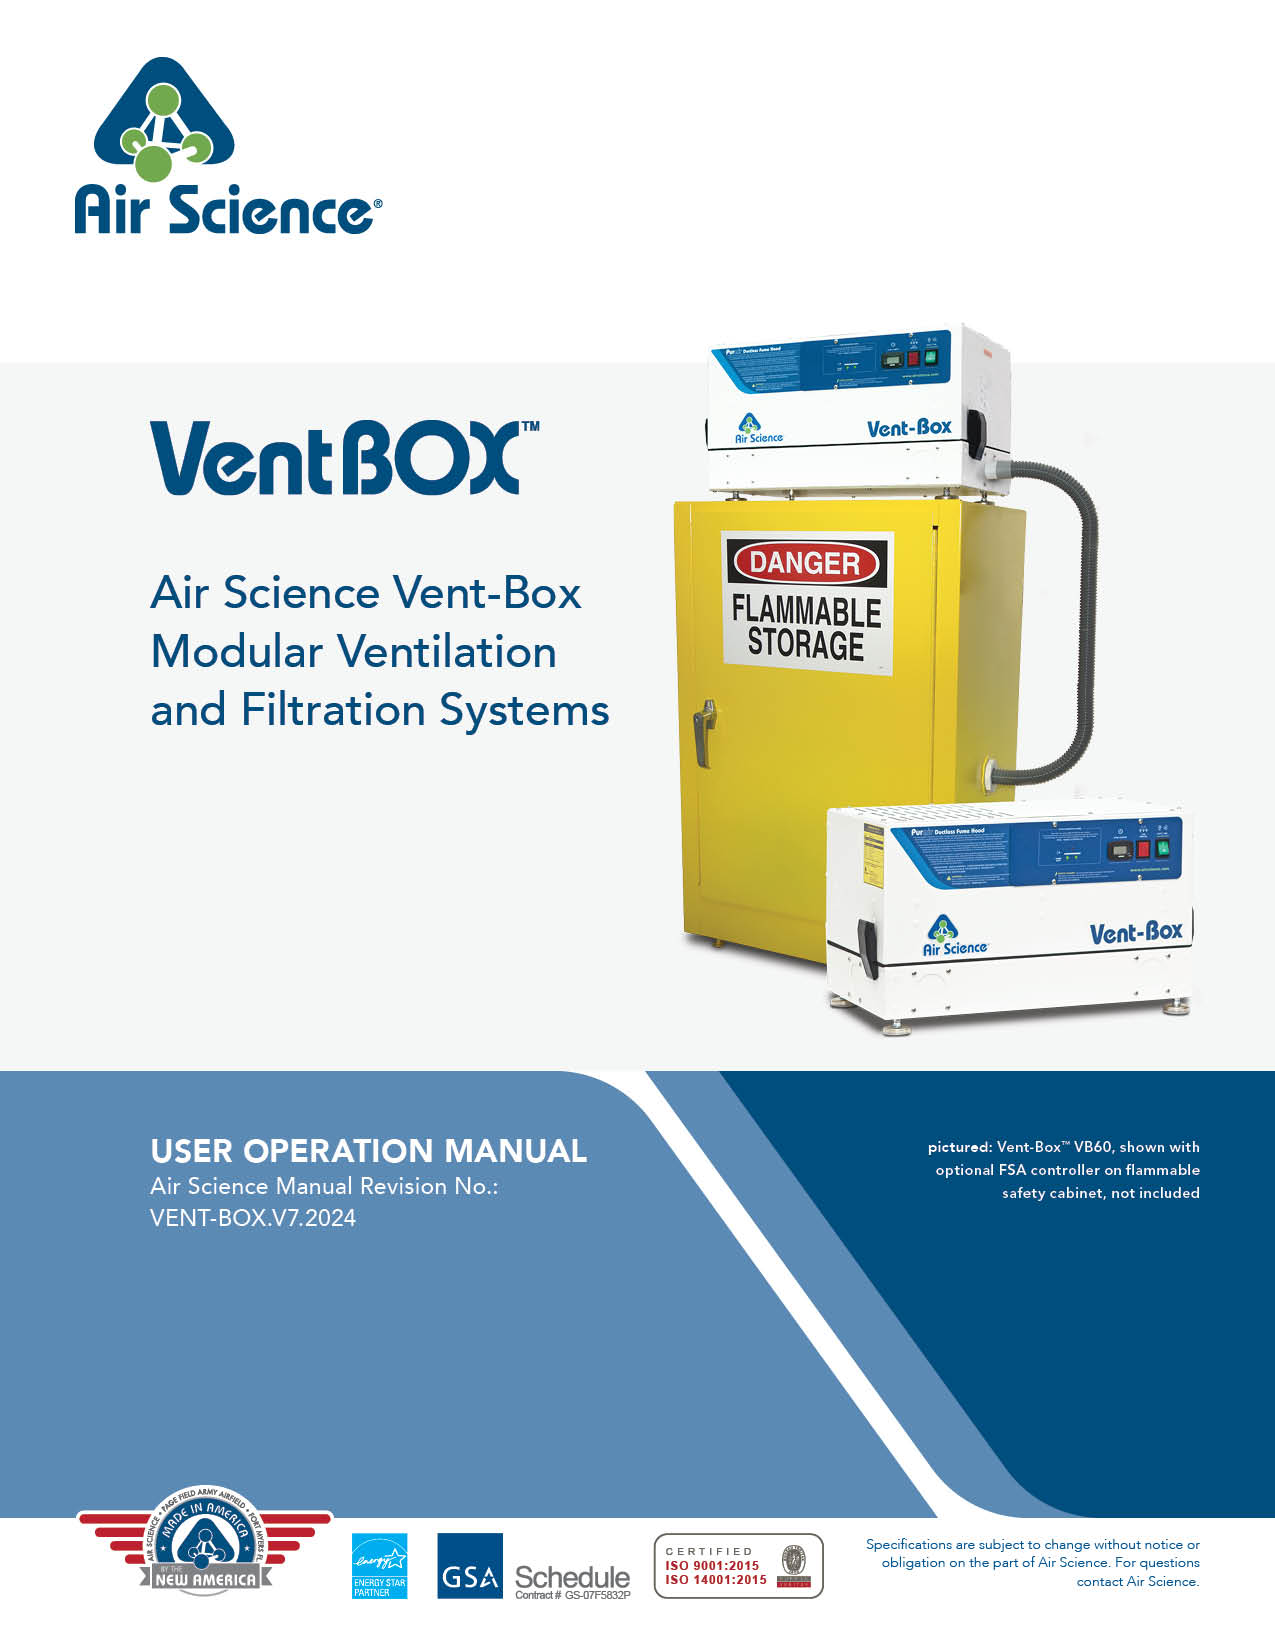 VentBOX Filtration System